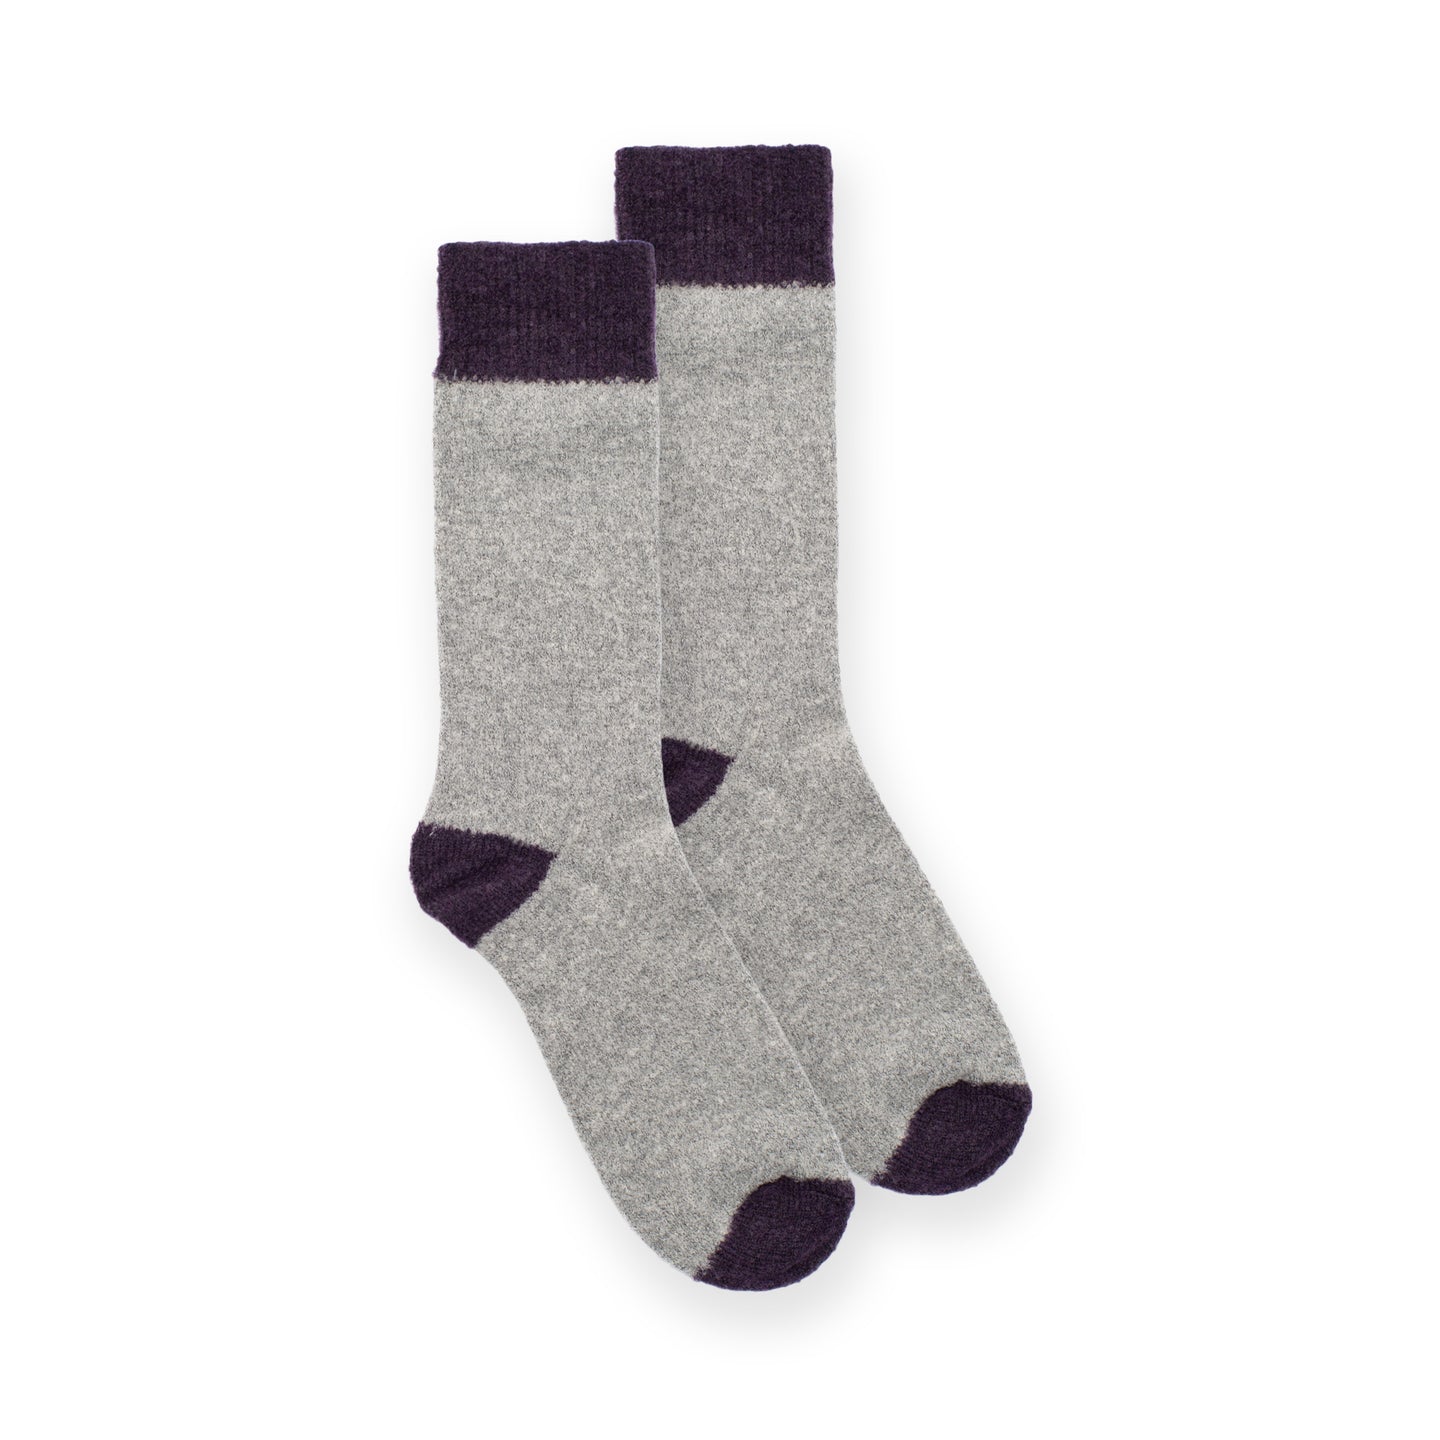 Socks grey - plum